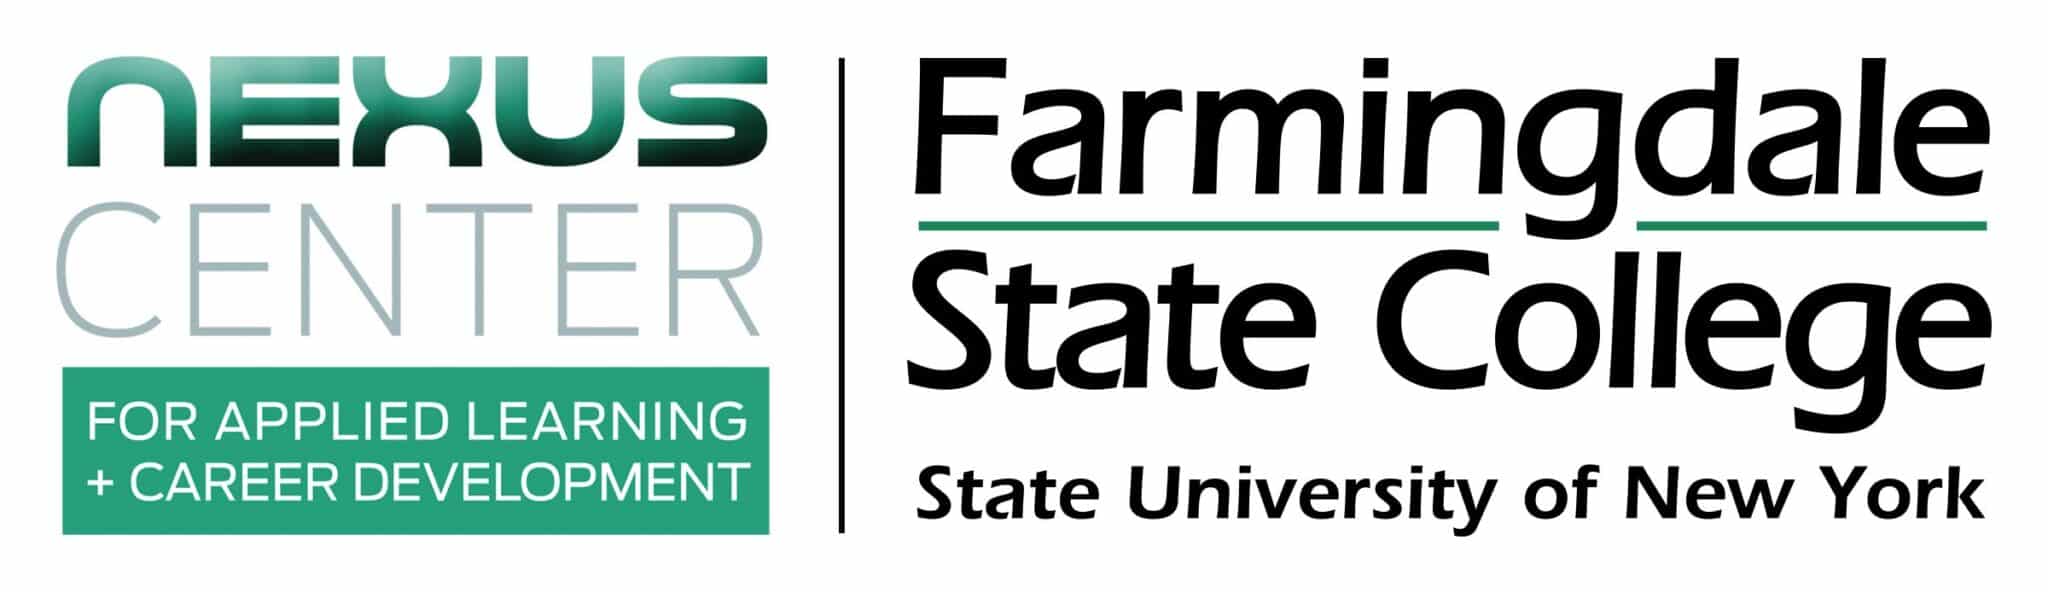 Nexus Center for Applied Learning + Career Development – Farmingdale State College, State University of New York Logo